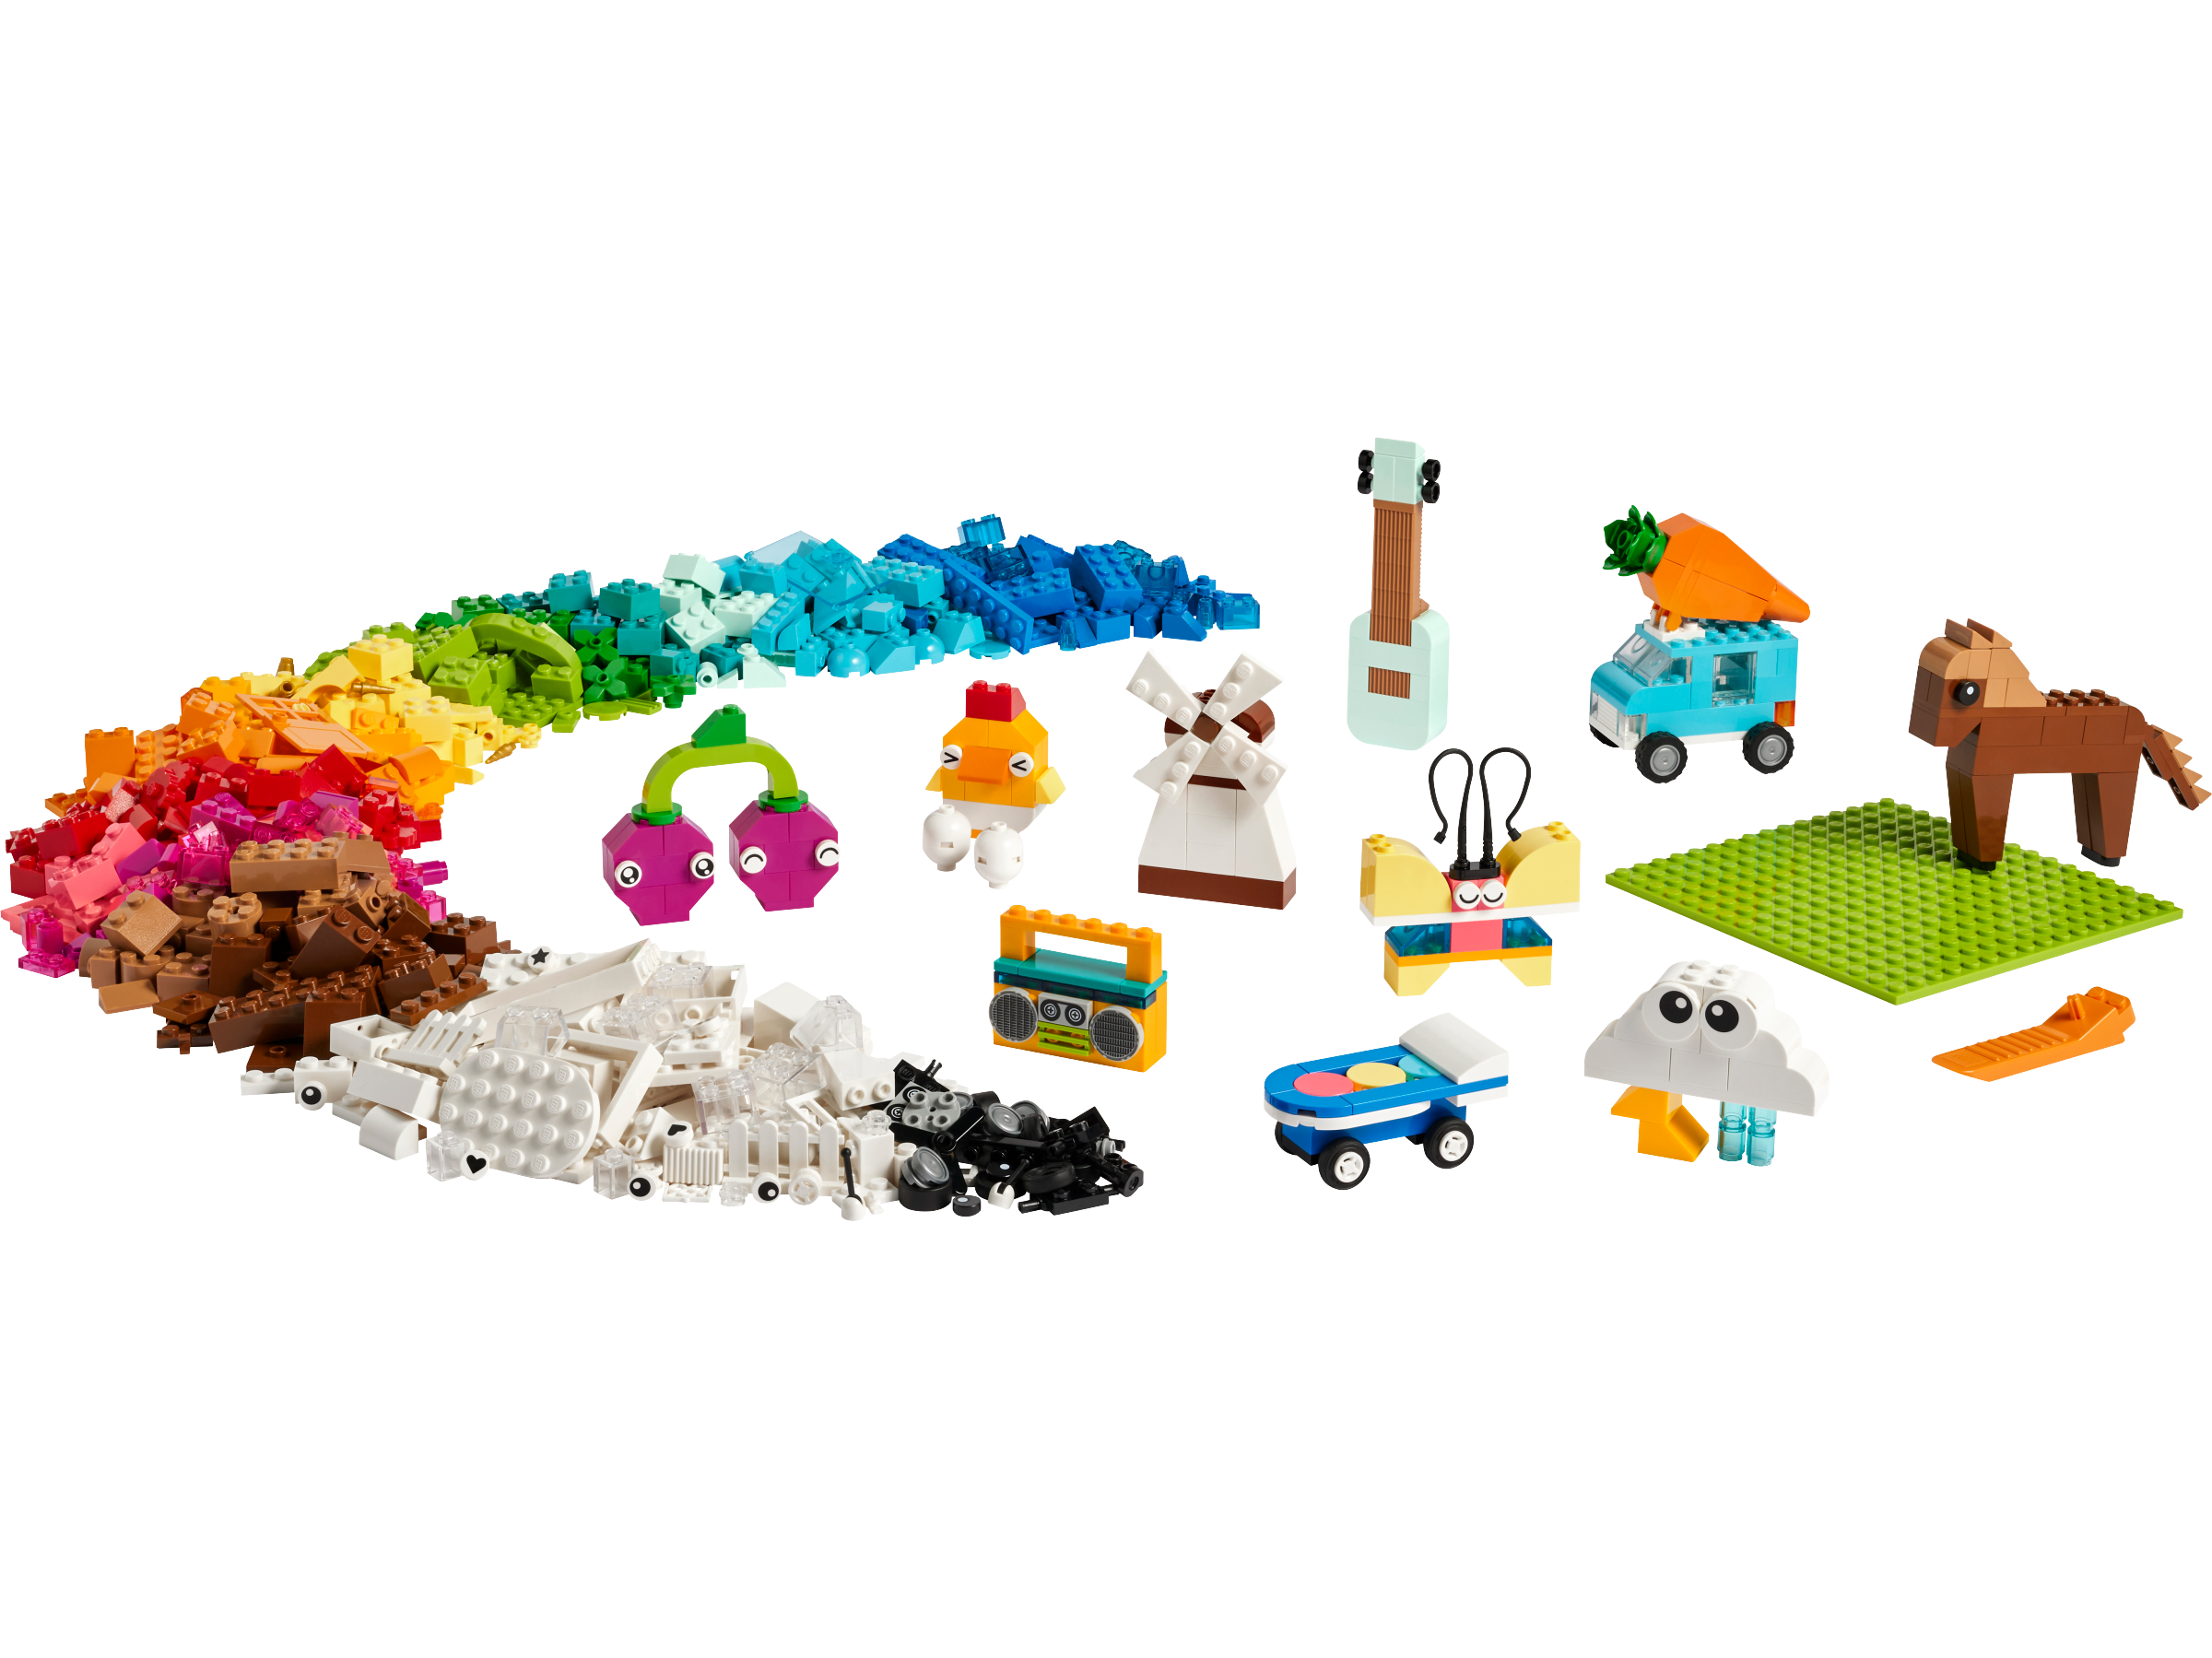 Vibrant Creative Brick Box 11038 | Classic | Buy online at the Official  LEGO® Shop CA